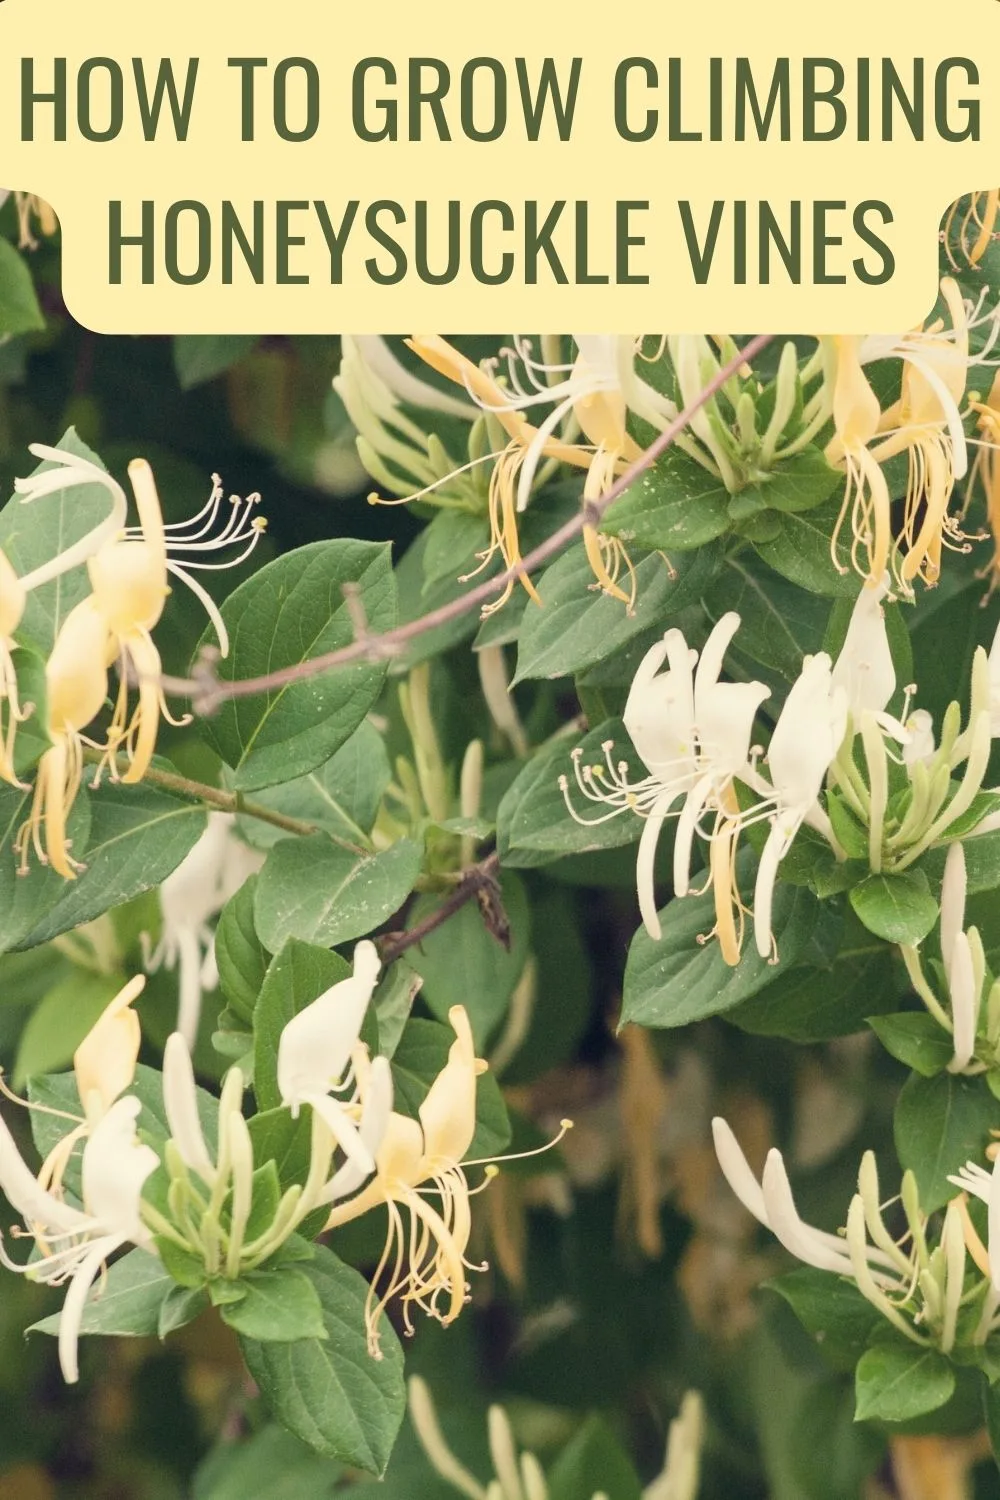 How to grow climbing honeysuckle vines